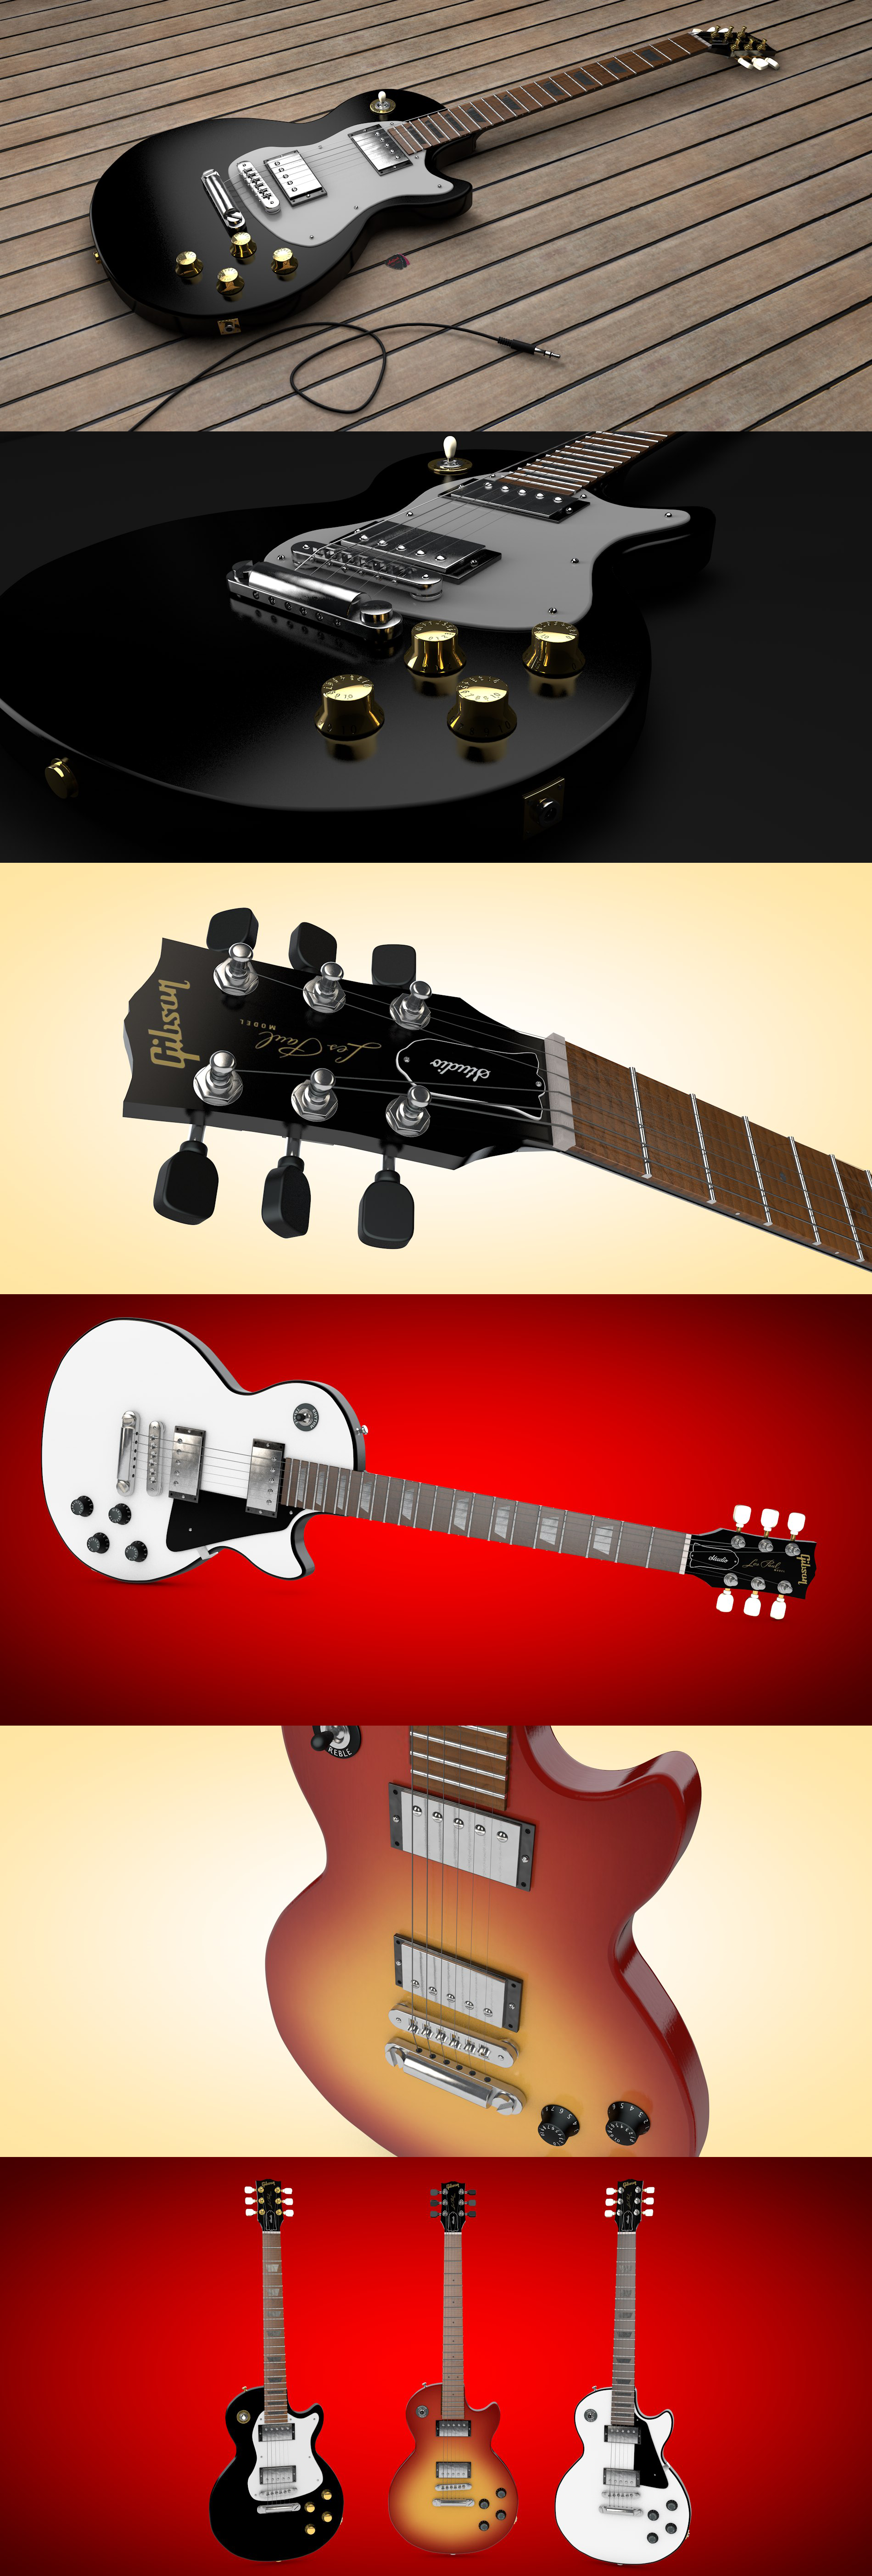 3D Les Paul Guitar